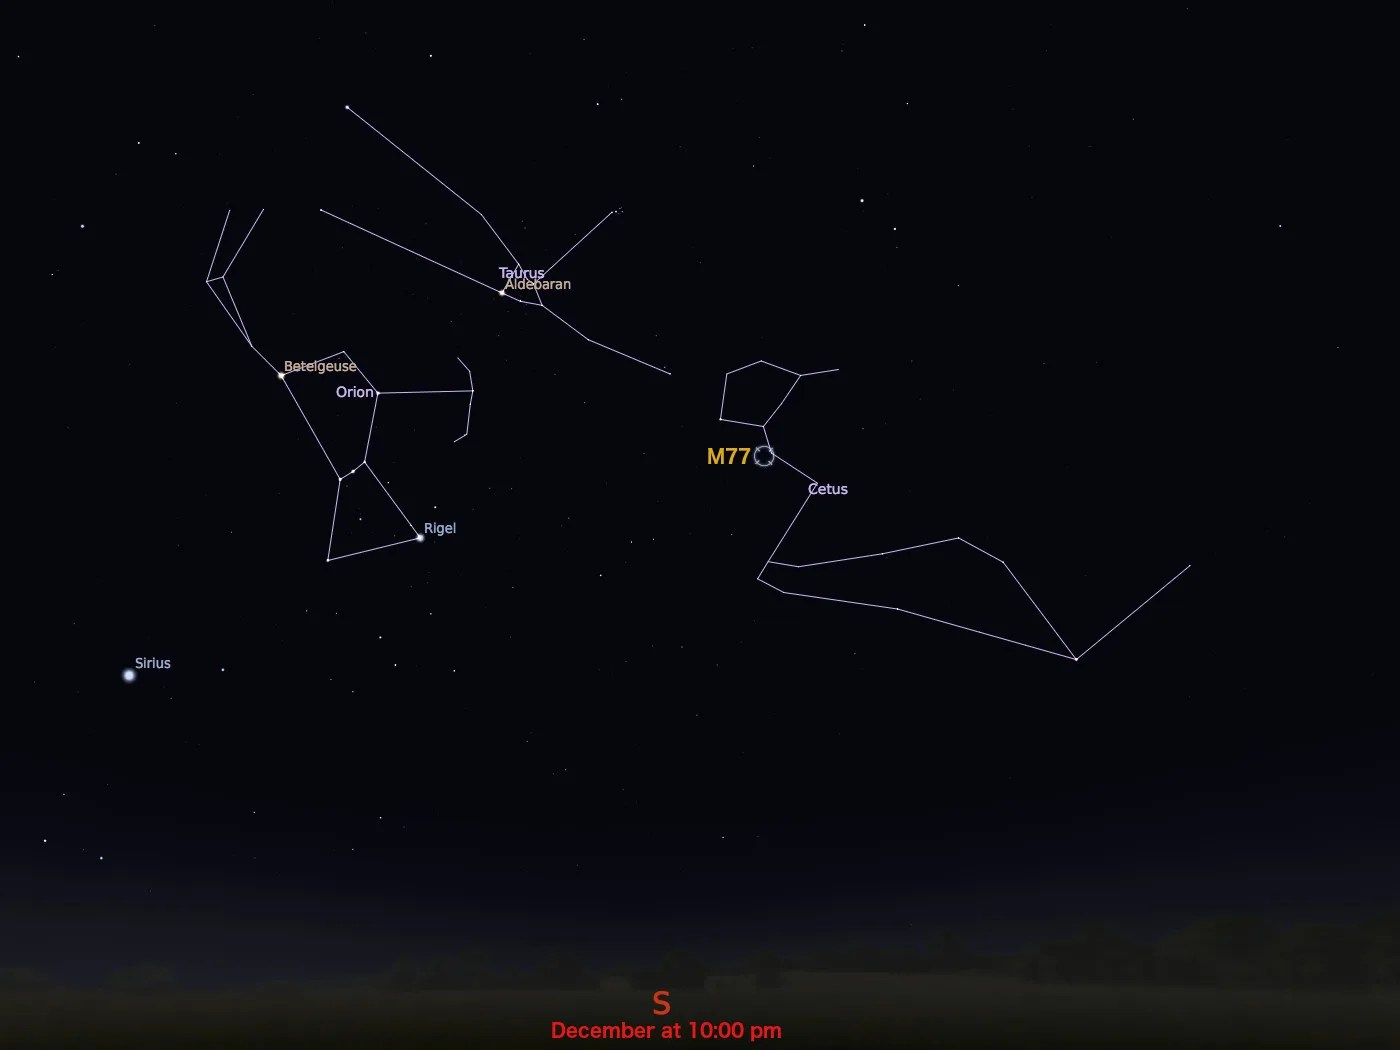 locator star chart for M77